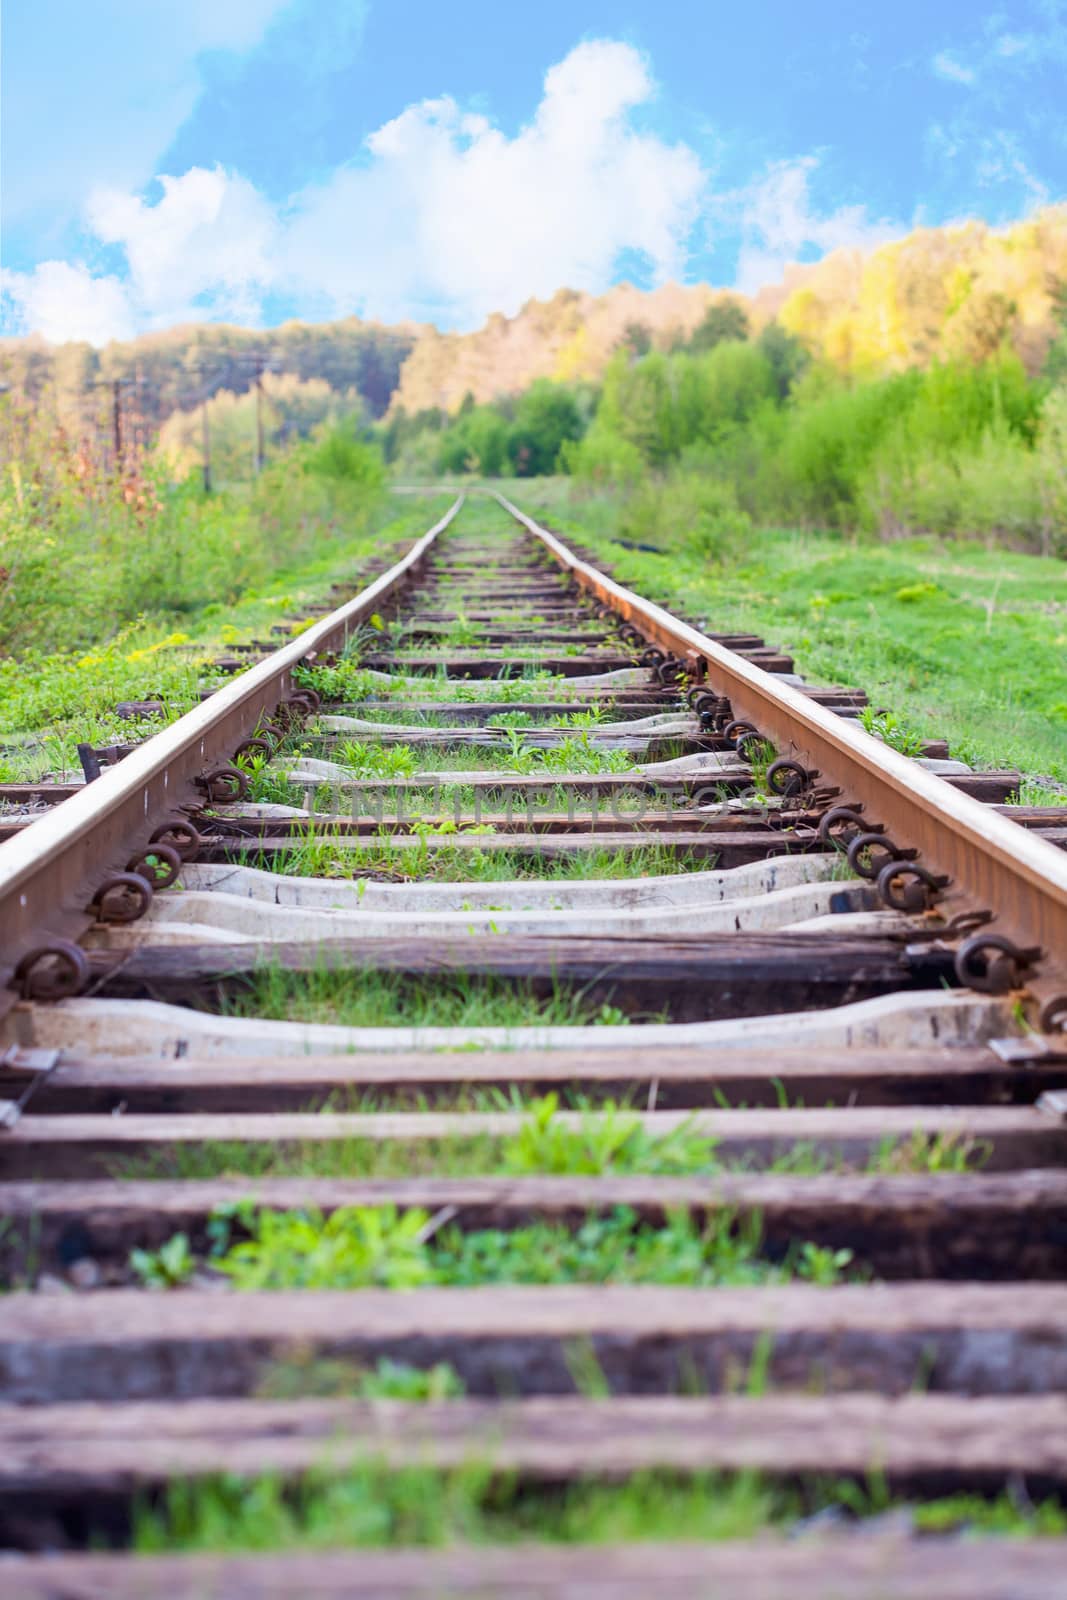 railway tracks in a rural scene with nice blue sky